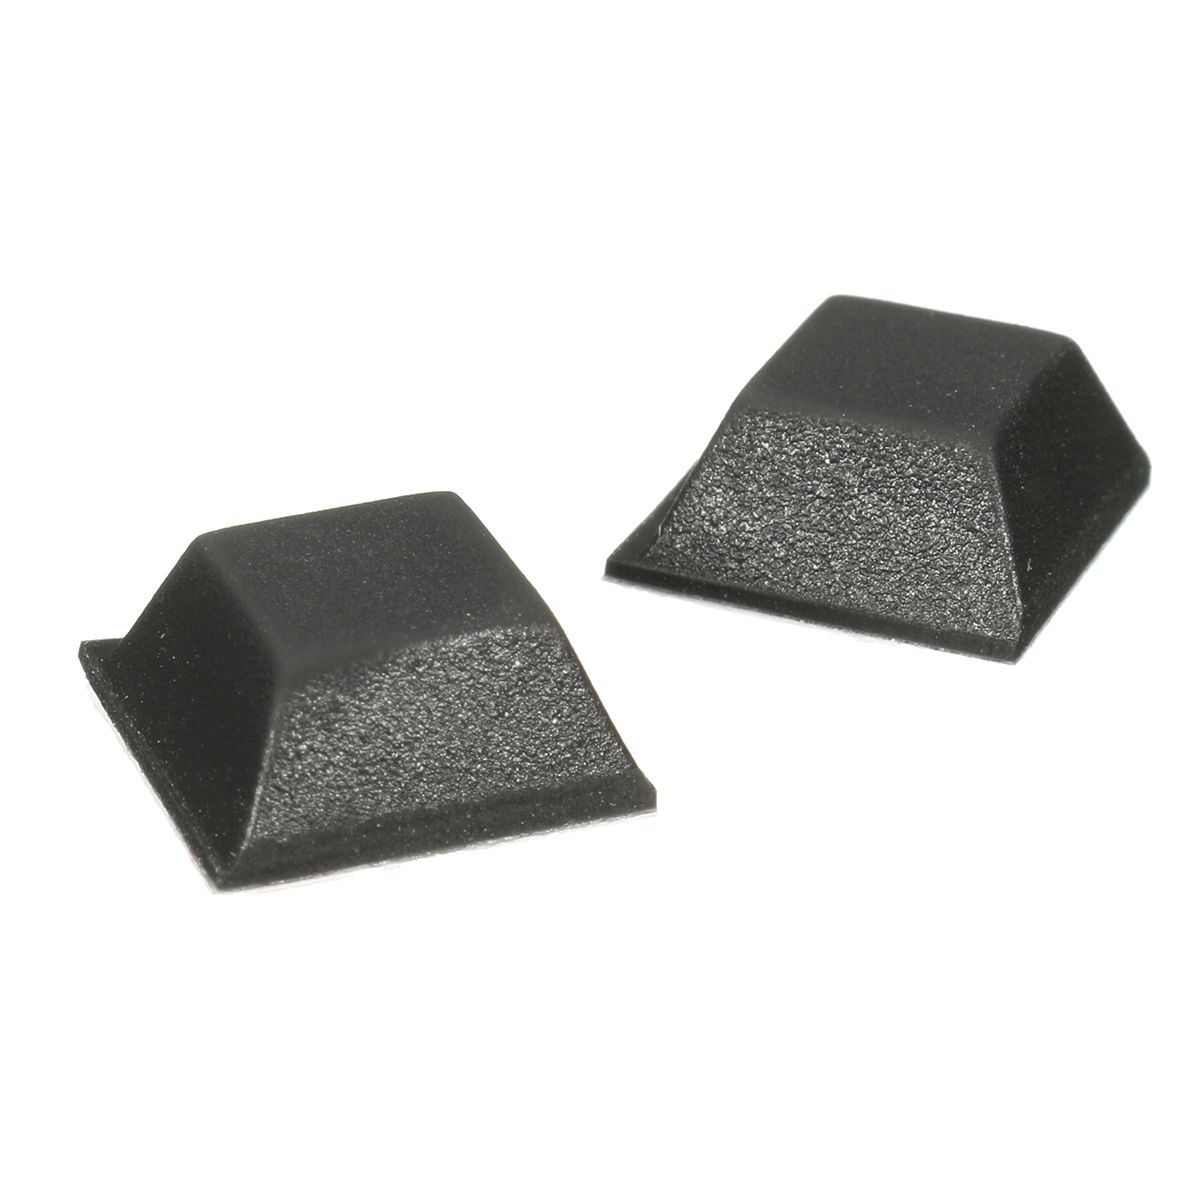 40Pcs-Square-Self-Adhesive-Stick-on-Rubber-Feet-Bumper-Door-Furniture-Buffer-Pad-1187691